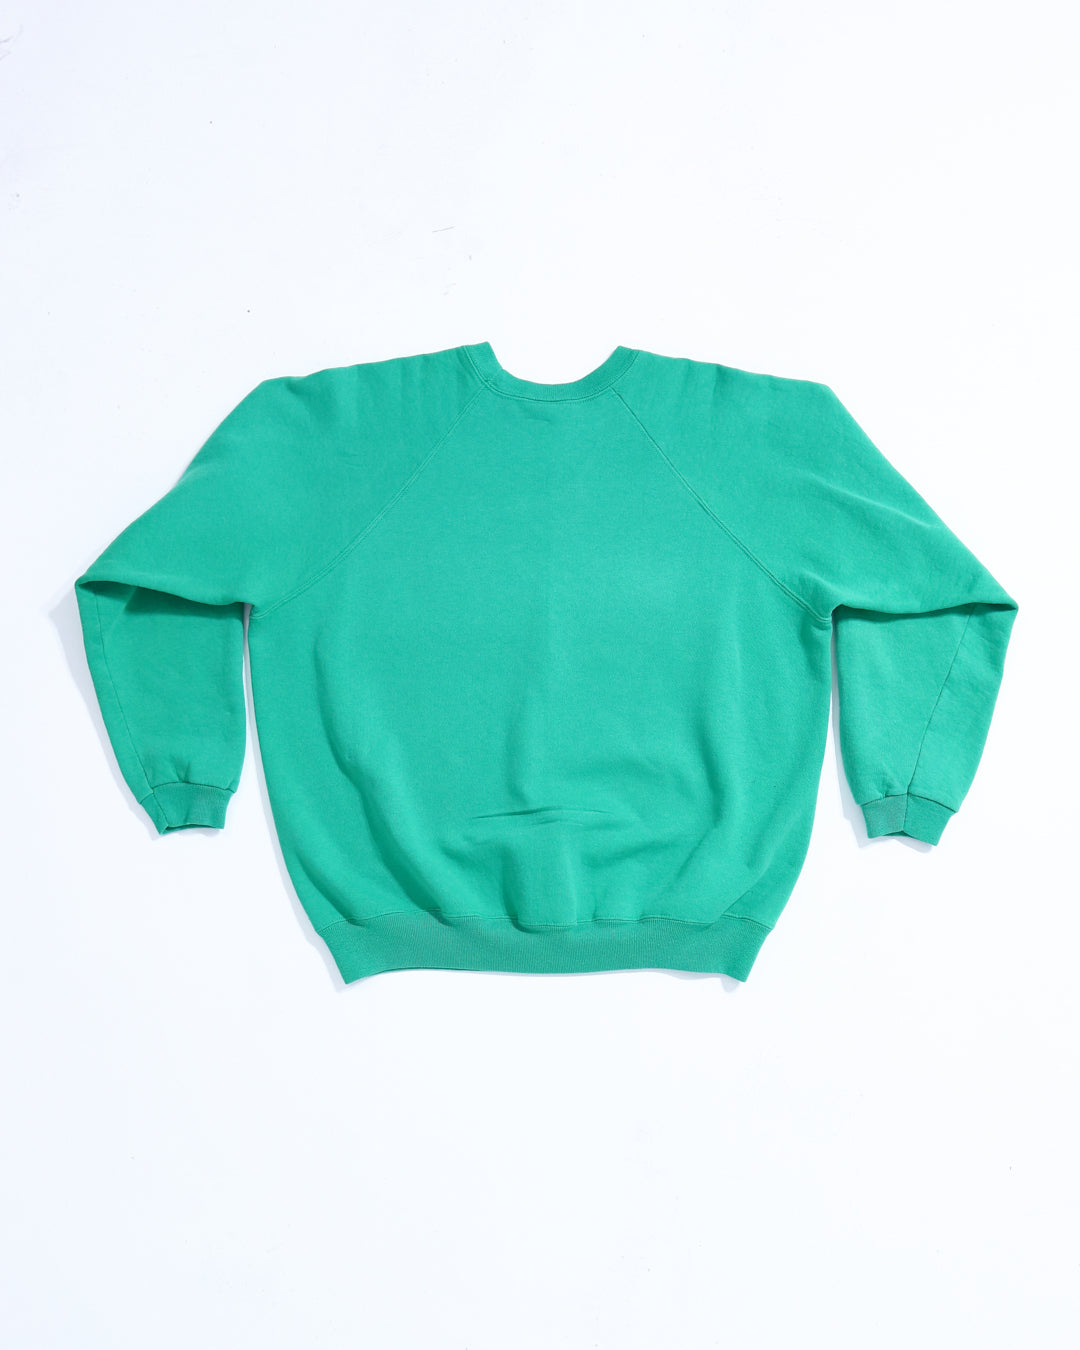 Blueprint Star Sweatshirt - Green/Gold (Large Petite)